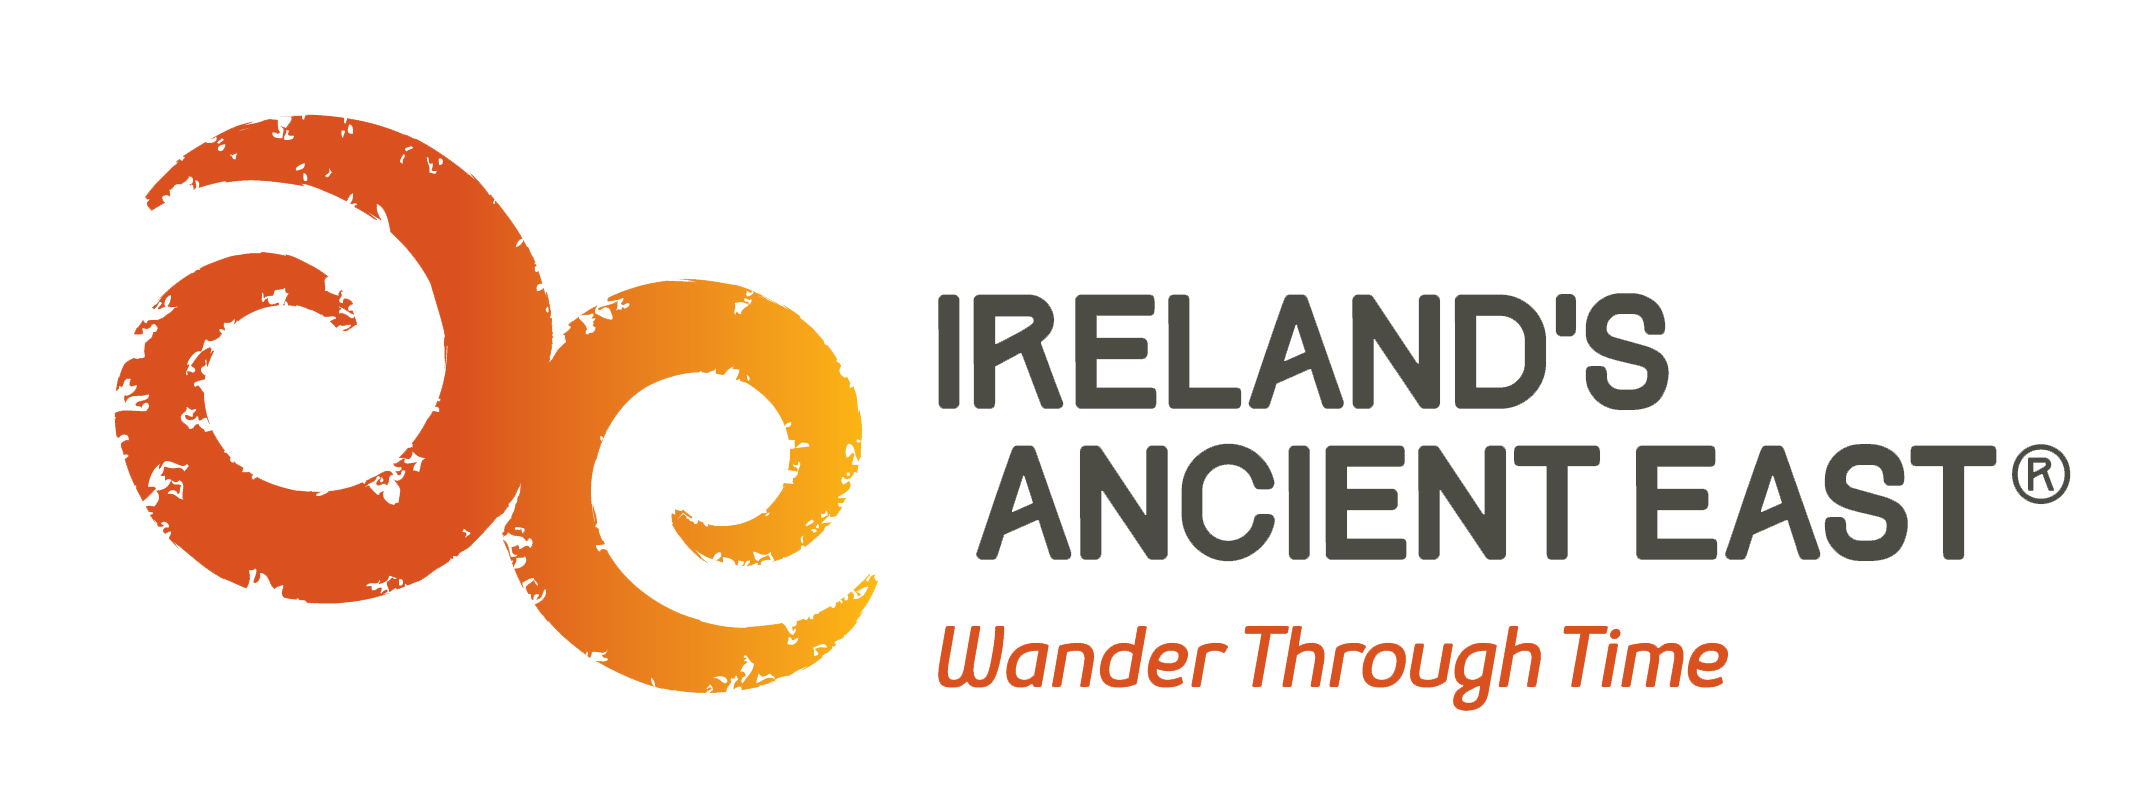 IrelandsAncientEast-REG_Logo-Tagline_Col.png